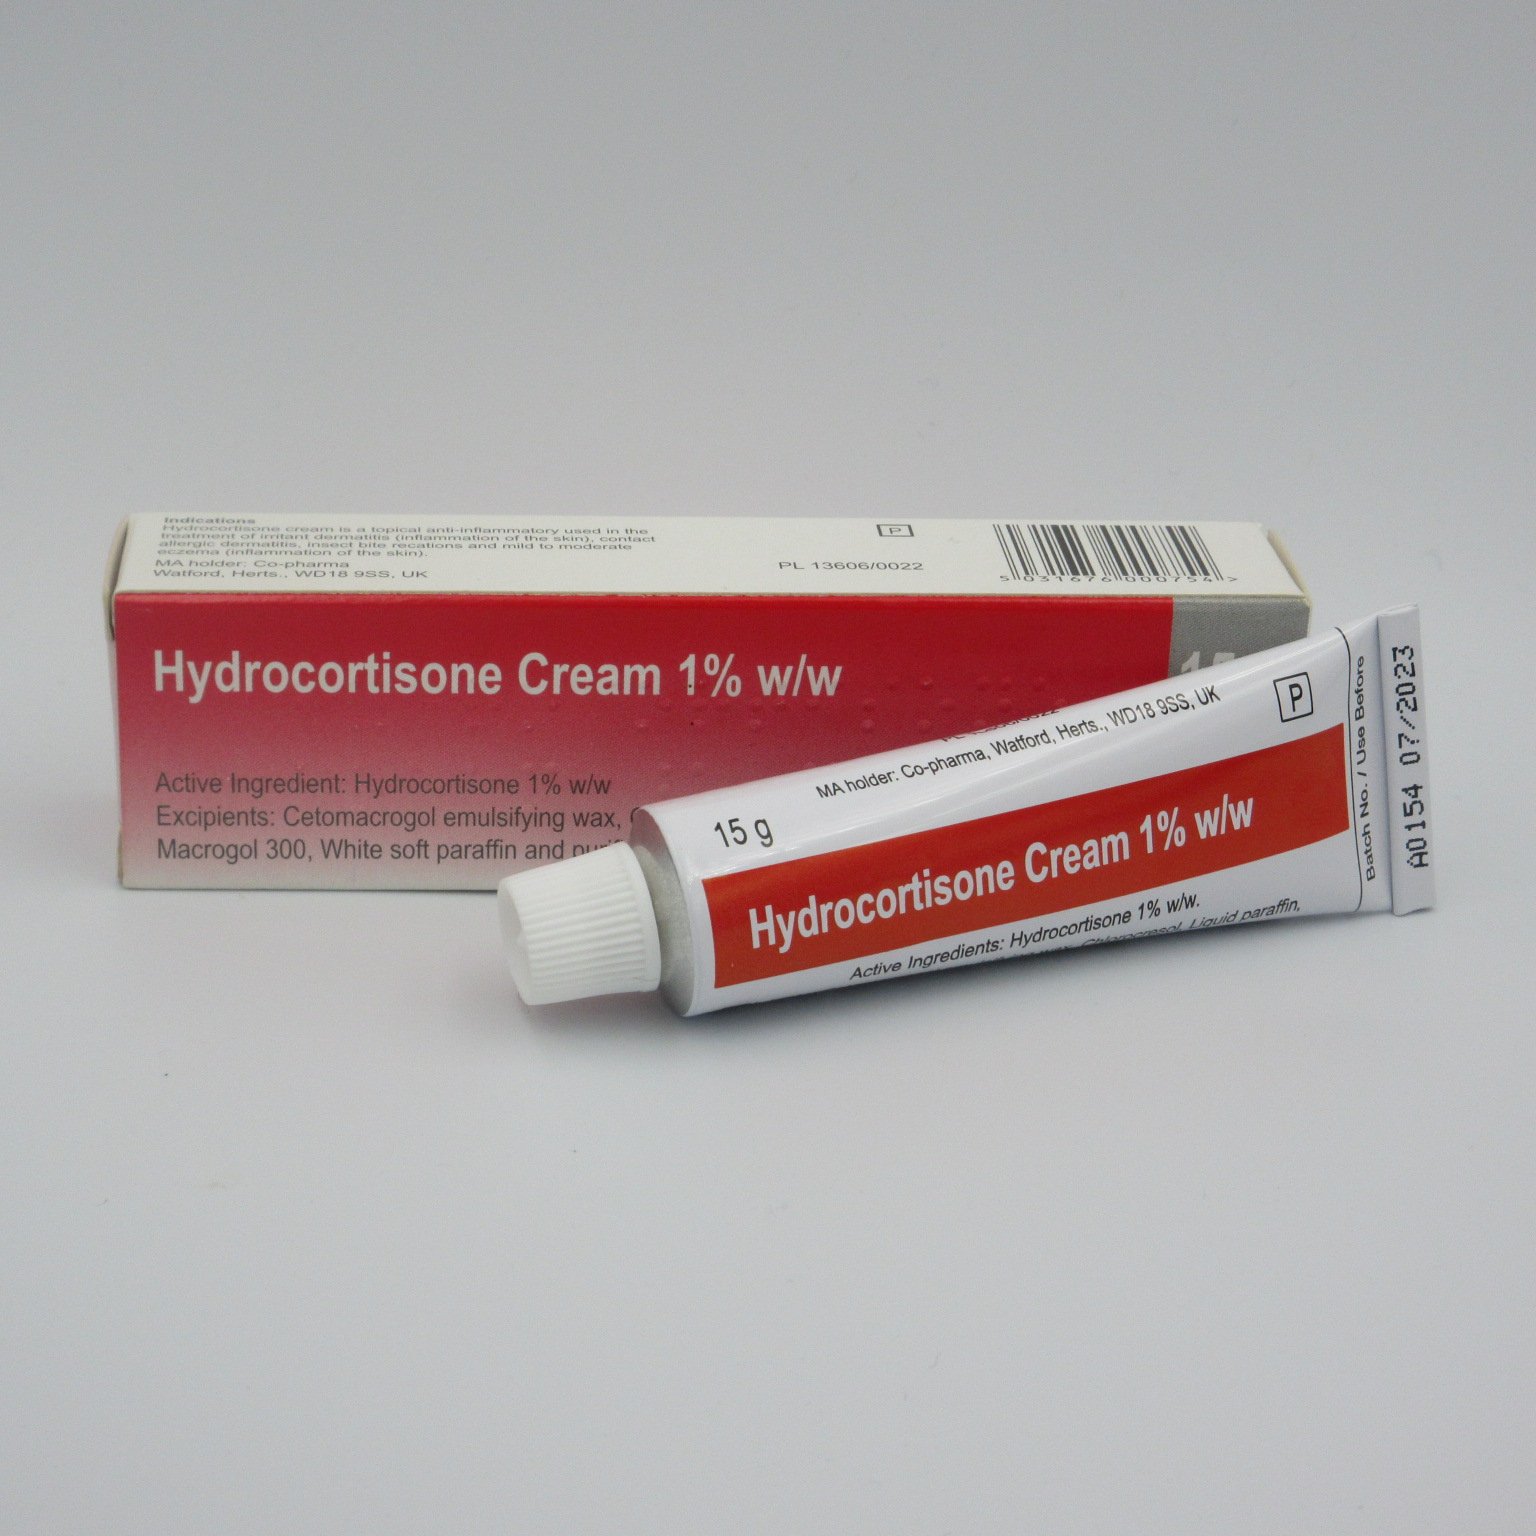 1 x Hydrocortisone Cream 1% w/w 15g Itching Eczema Psoriasis Bite Sting ...